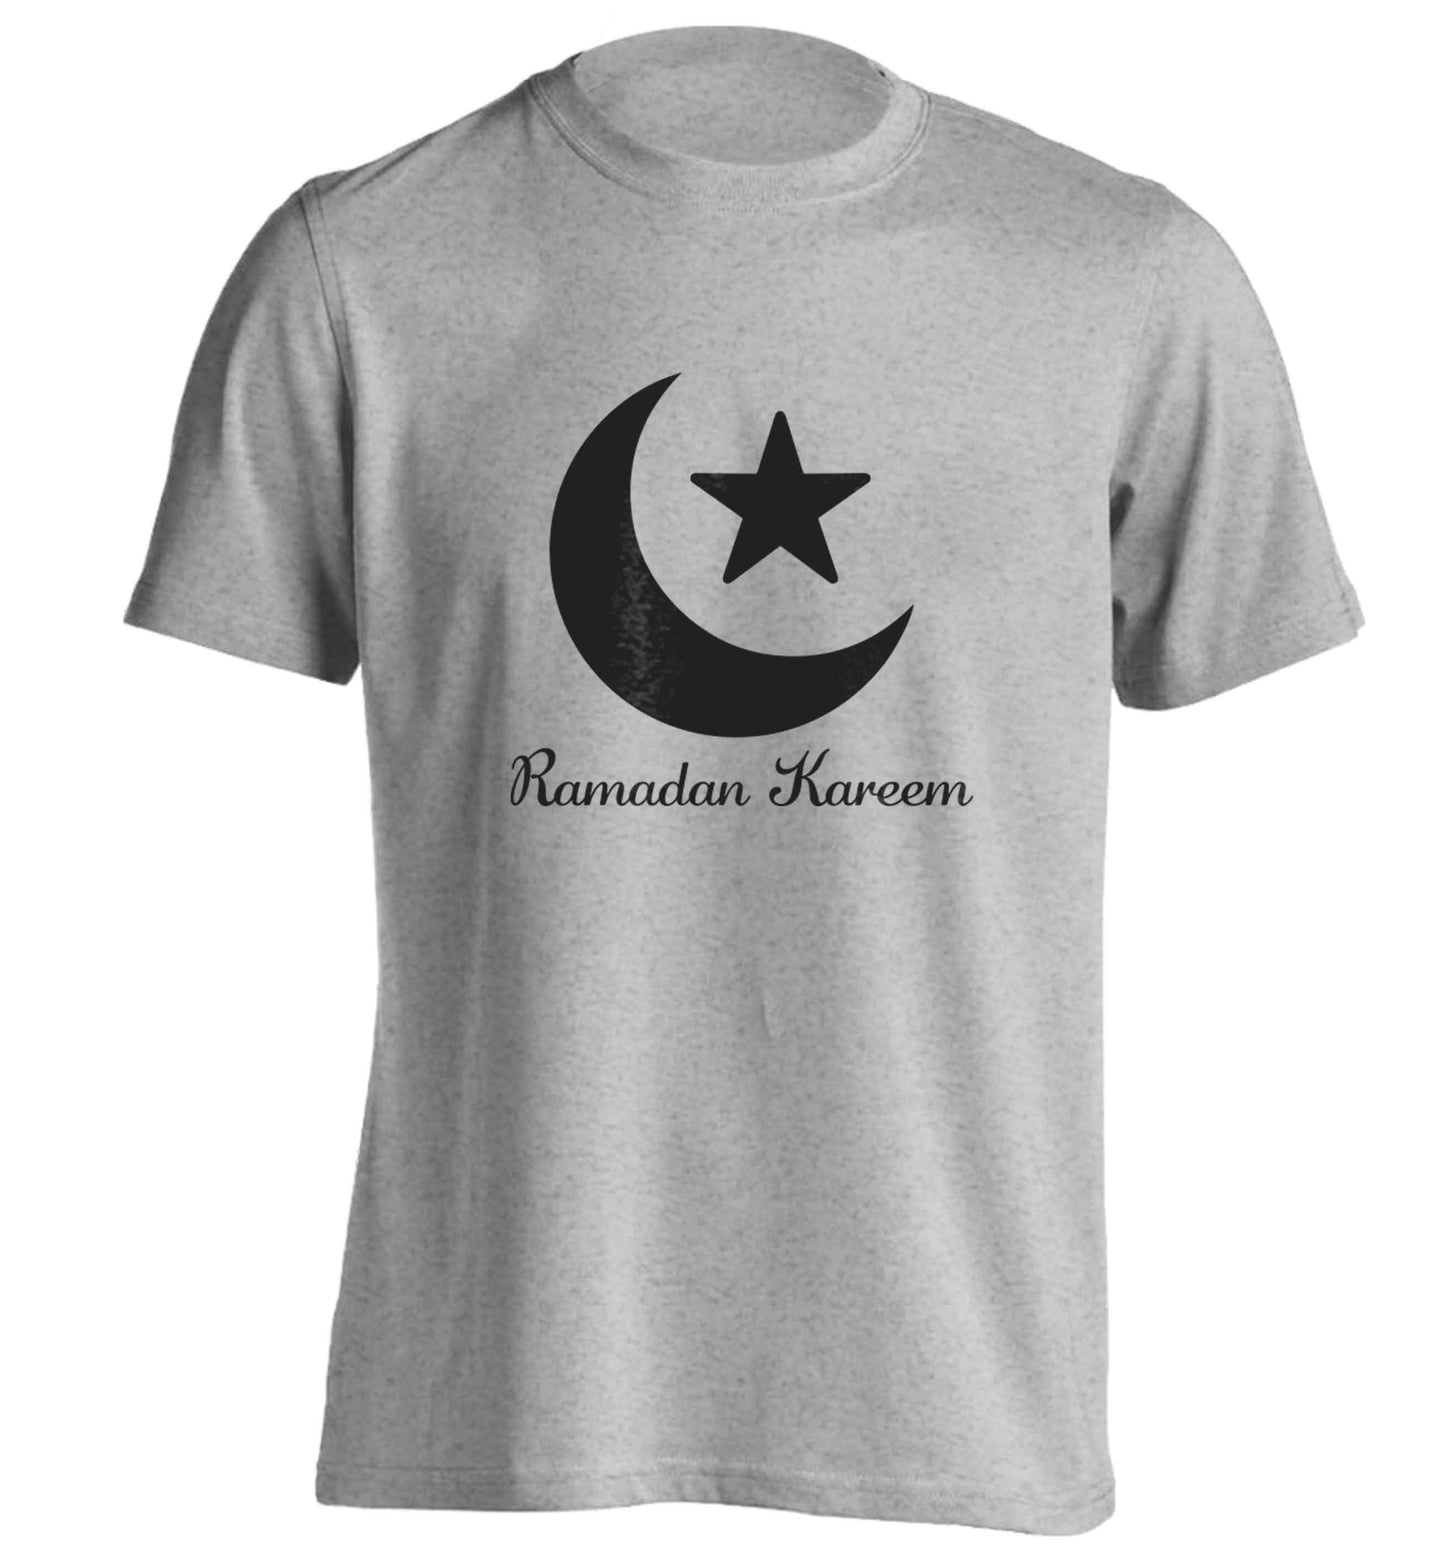 Ramadan kareem adults unisex grey Tshirt 2XL